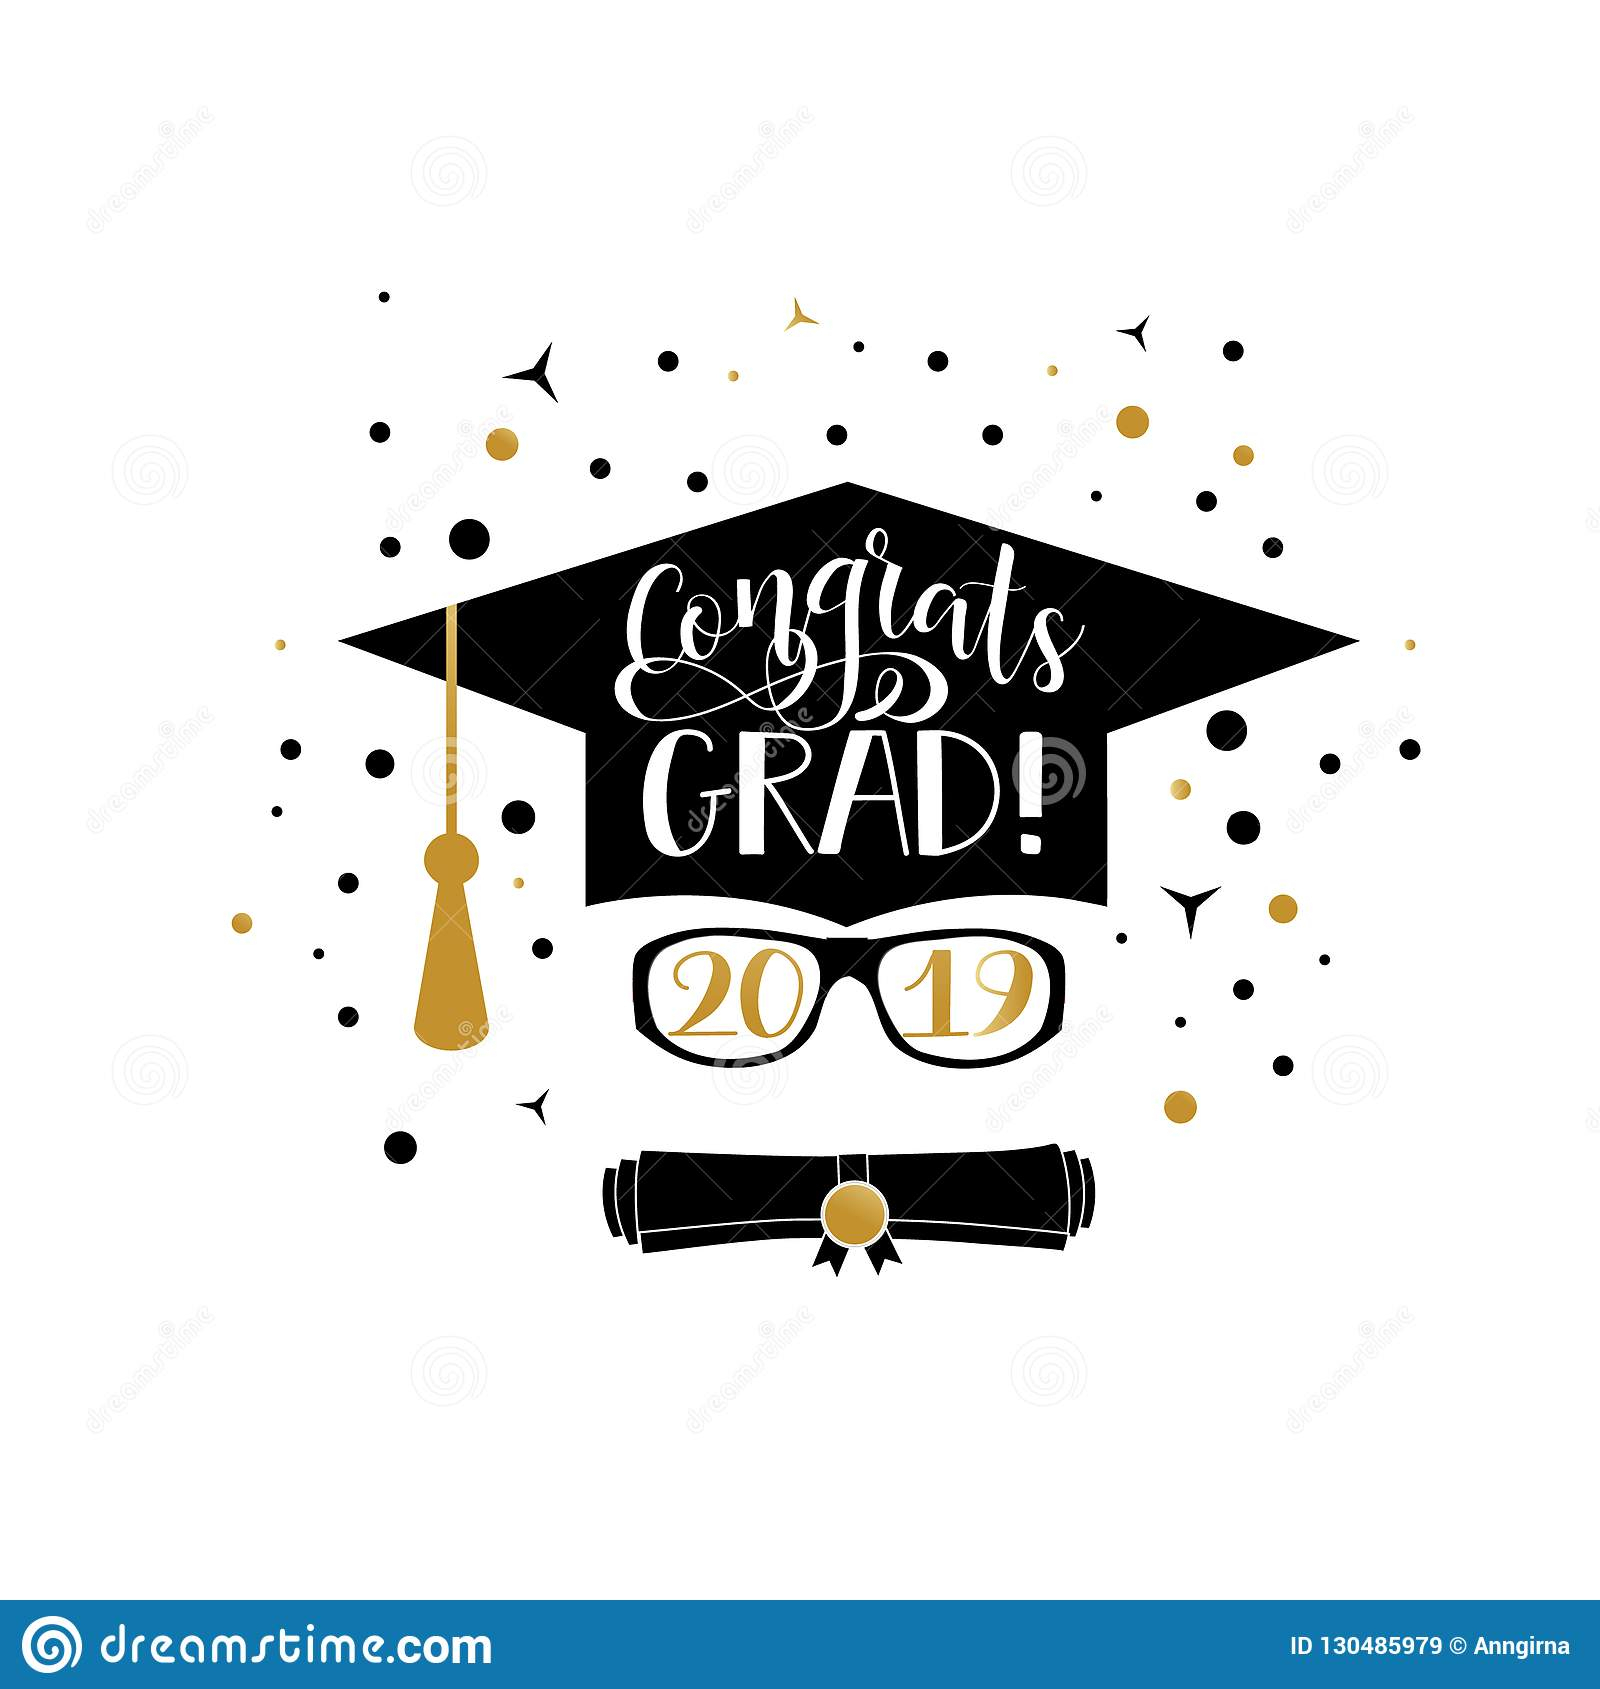 Congrats Grad 2019 Lettering. Congratulations Graduate Pertaining To Graduation Banner Template